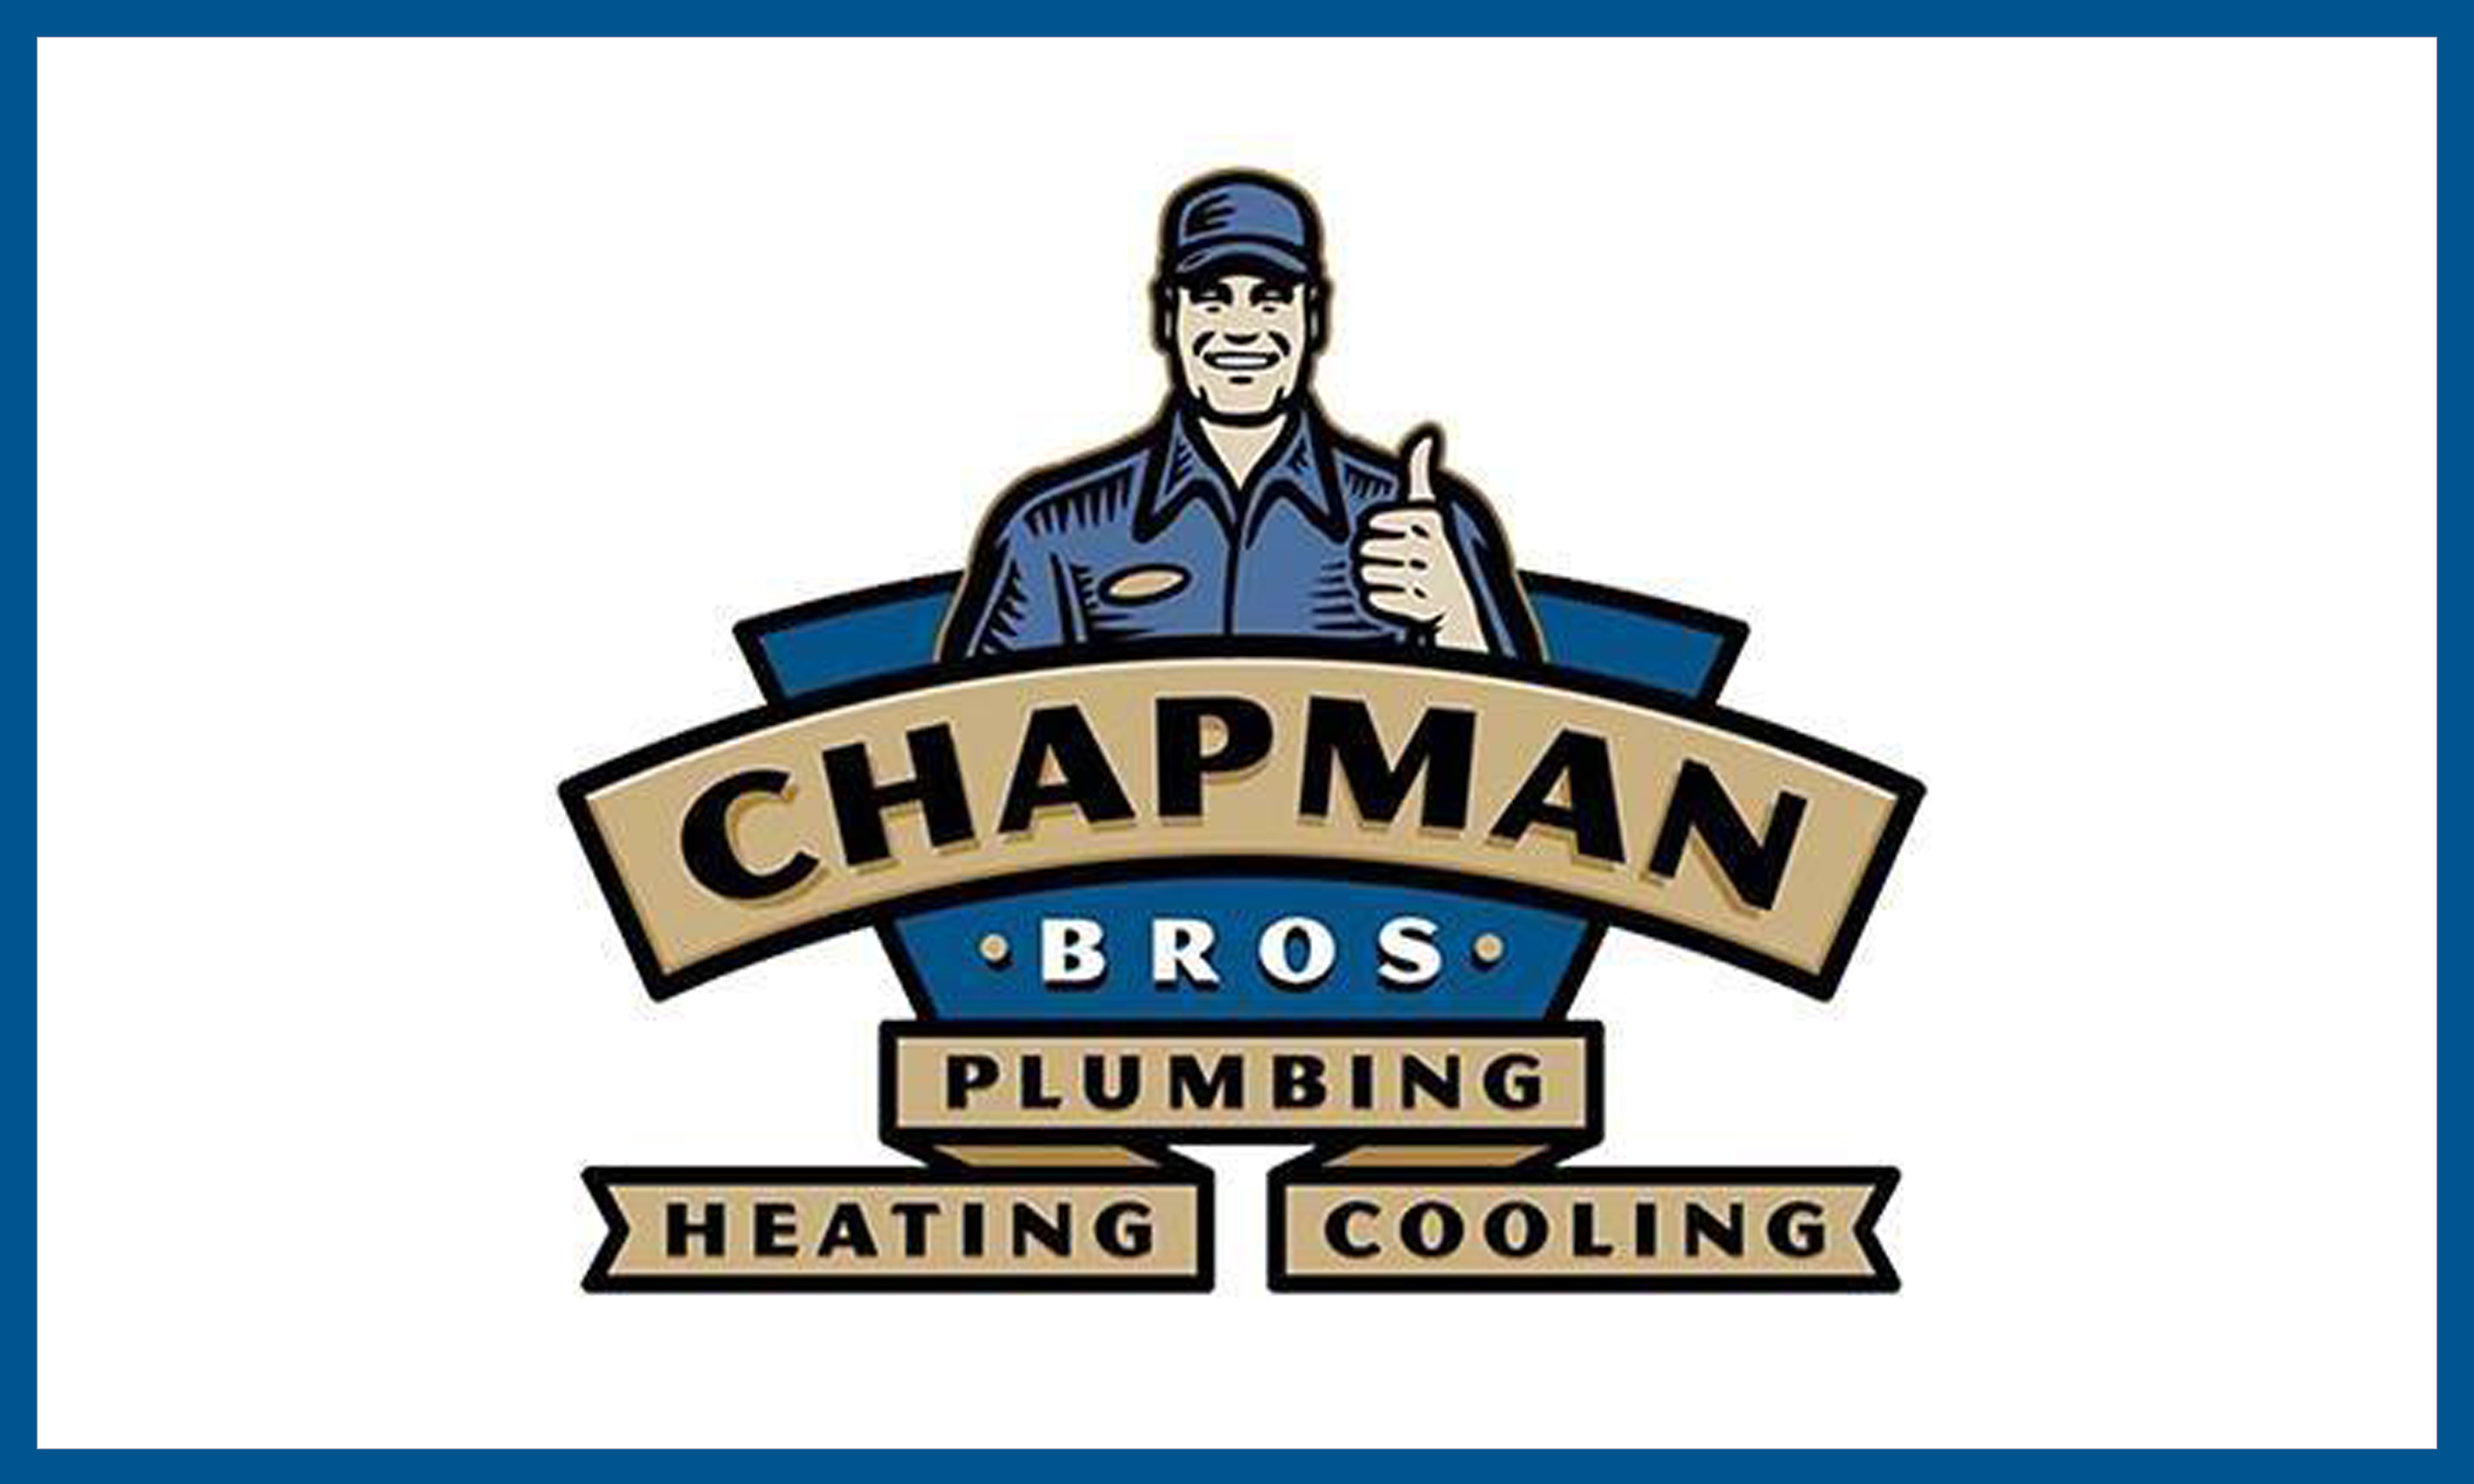 Chapman Brothers